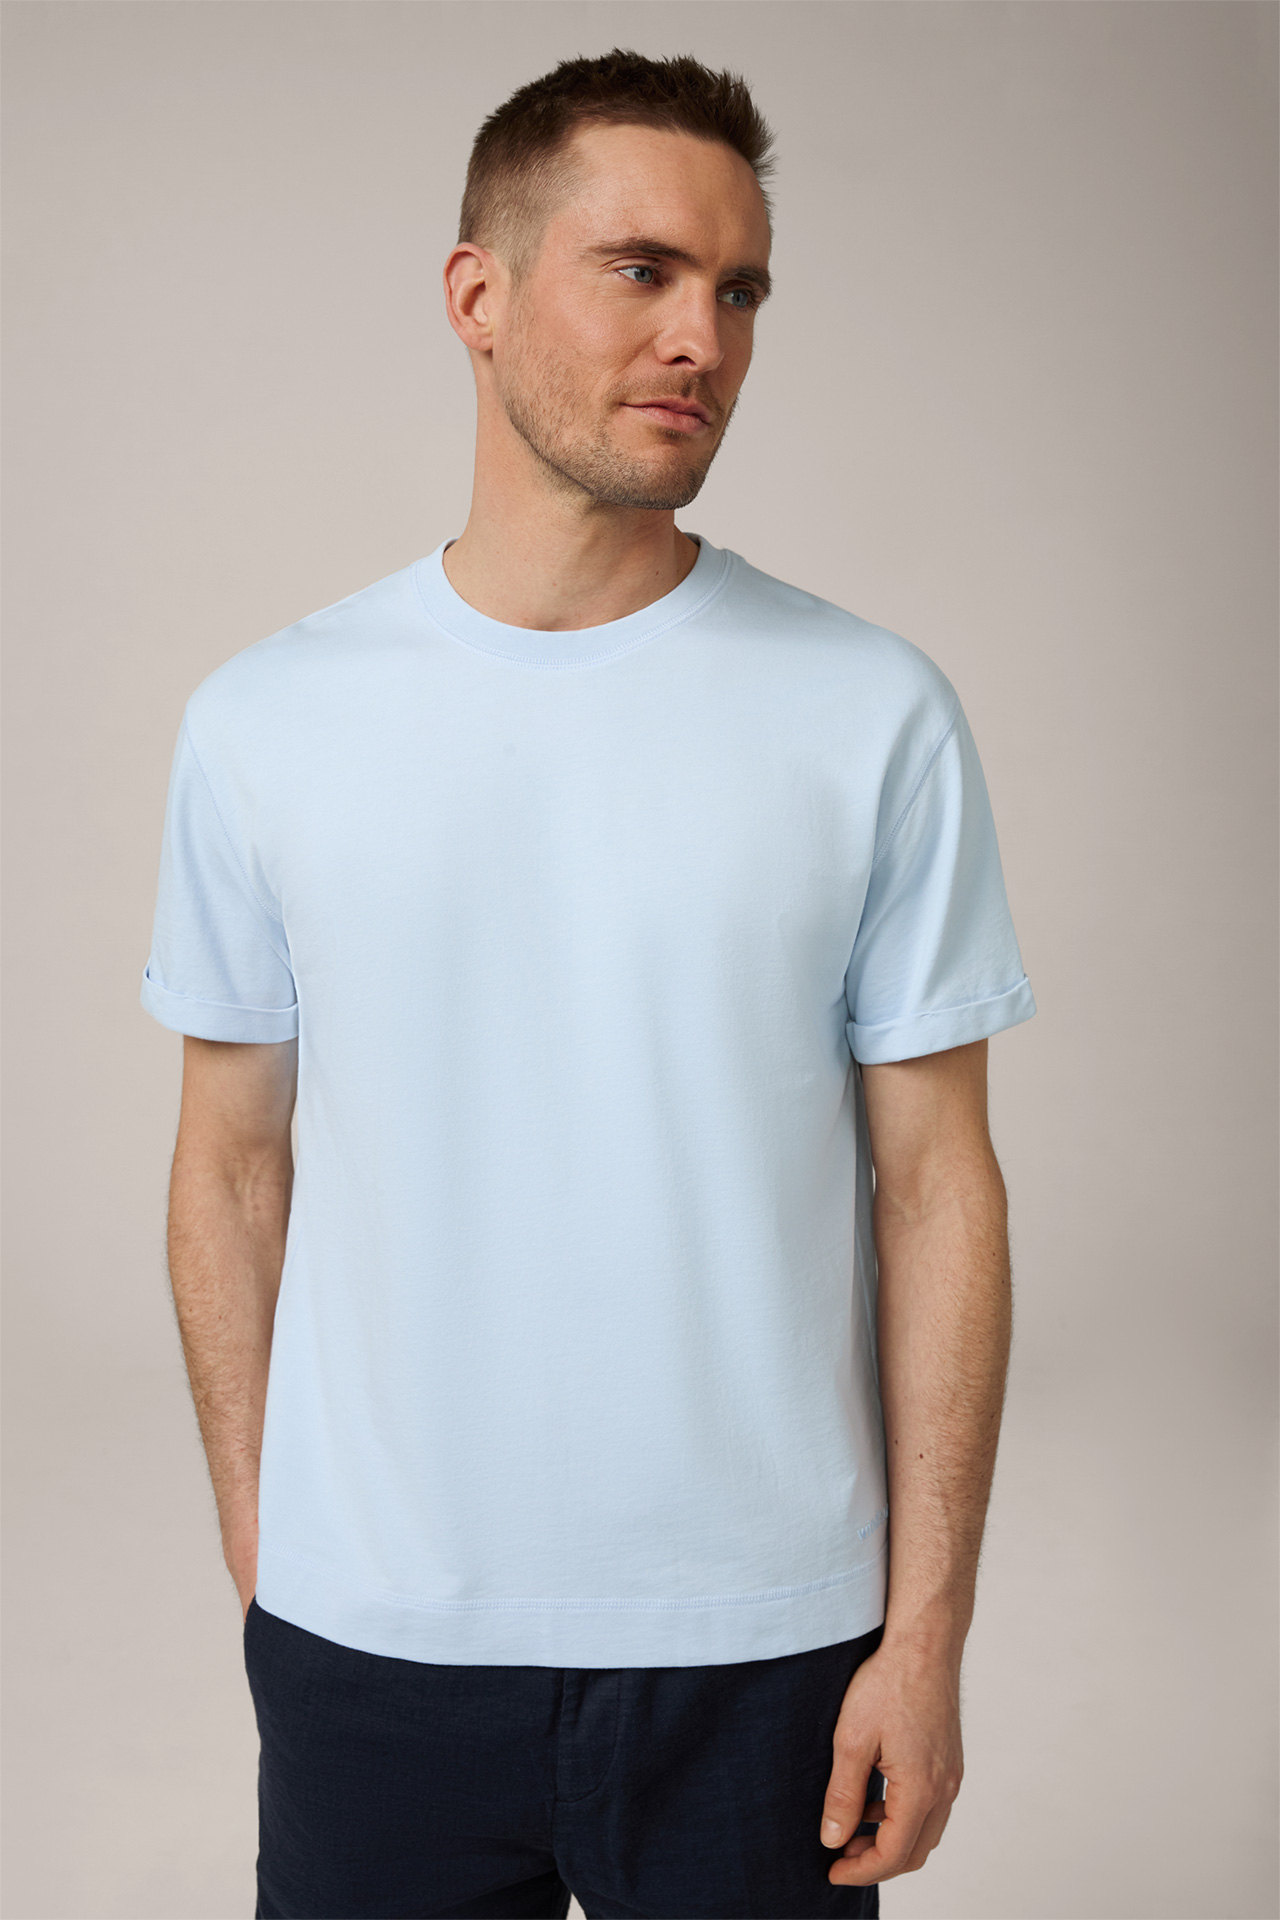 Sevo Cotton T-shirt in Light Blue